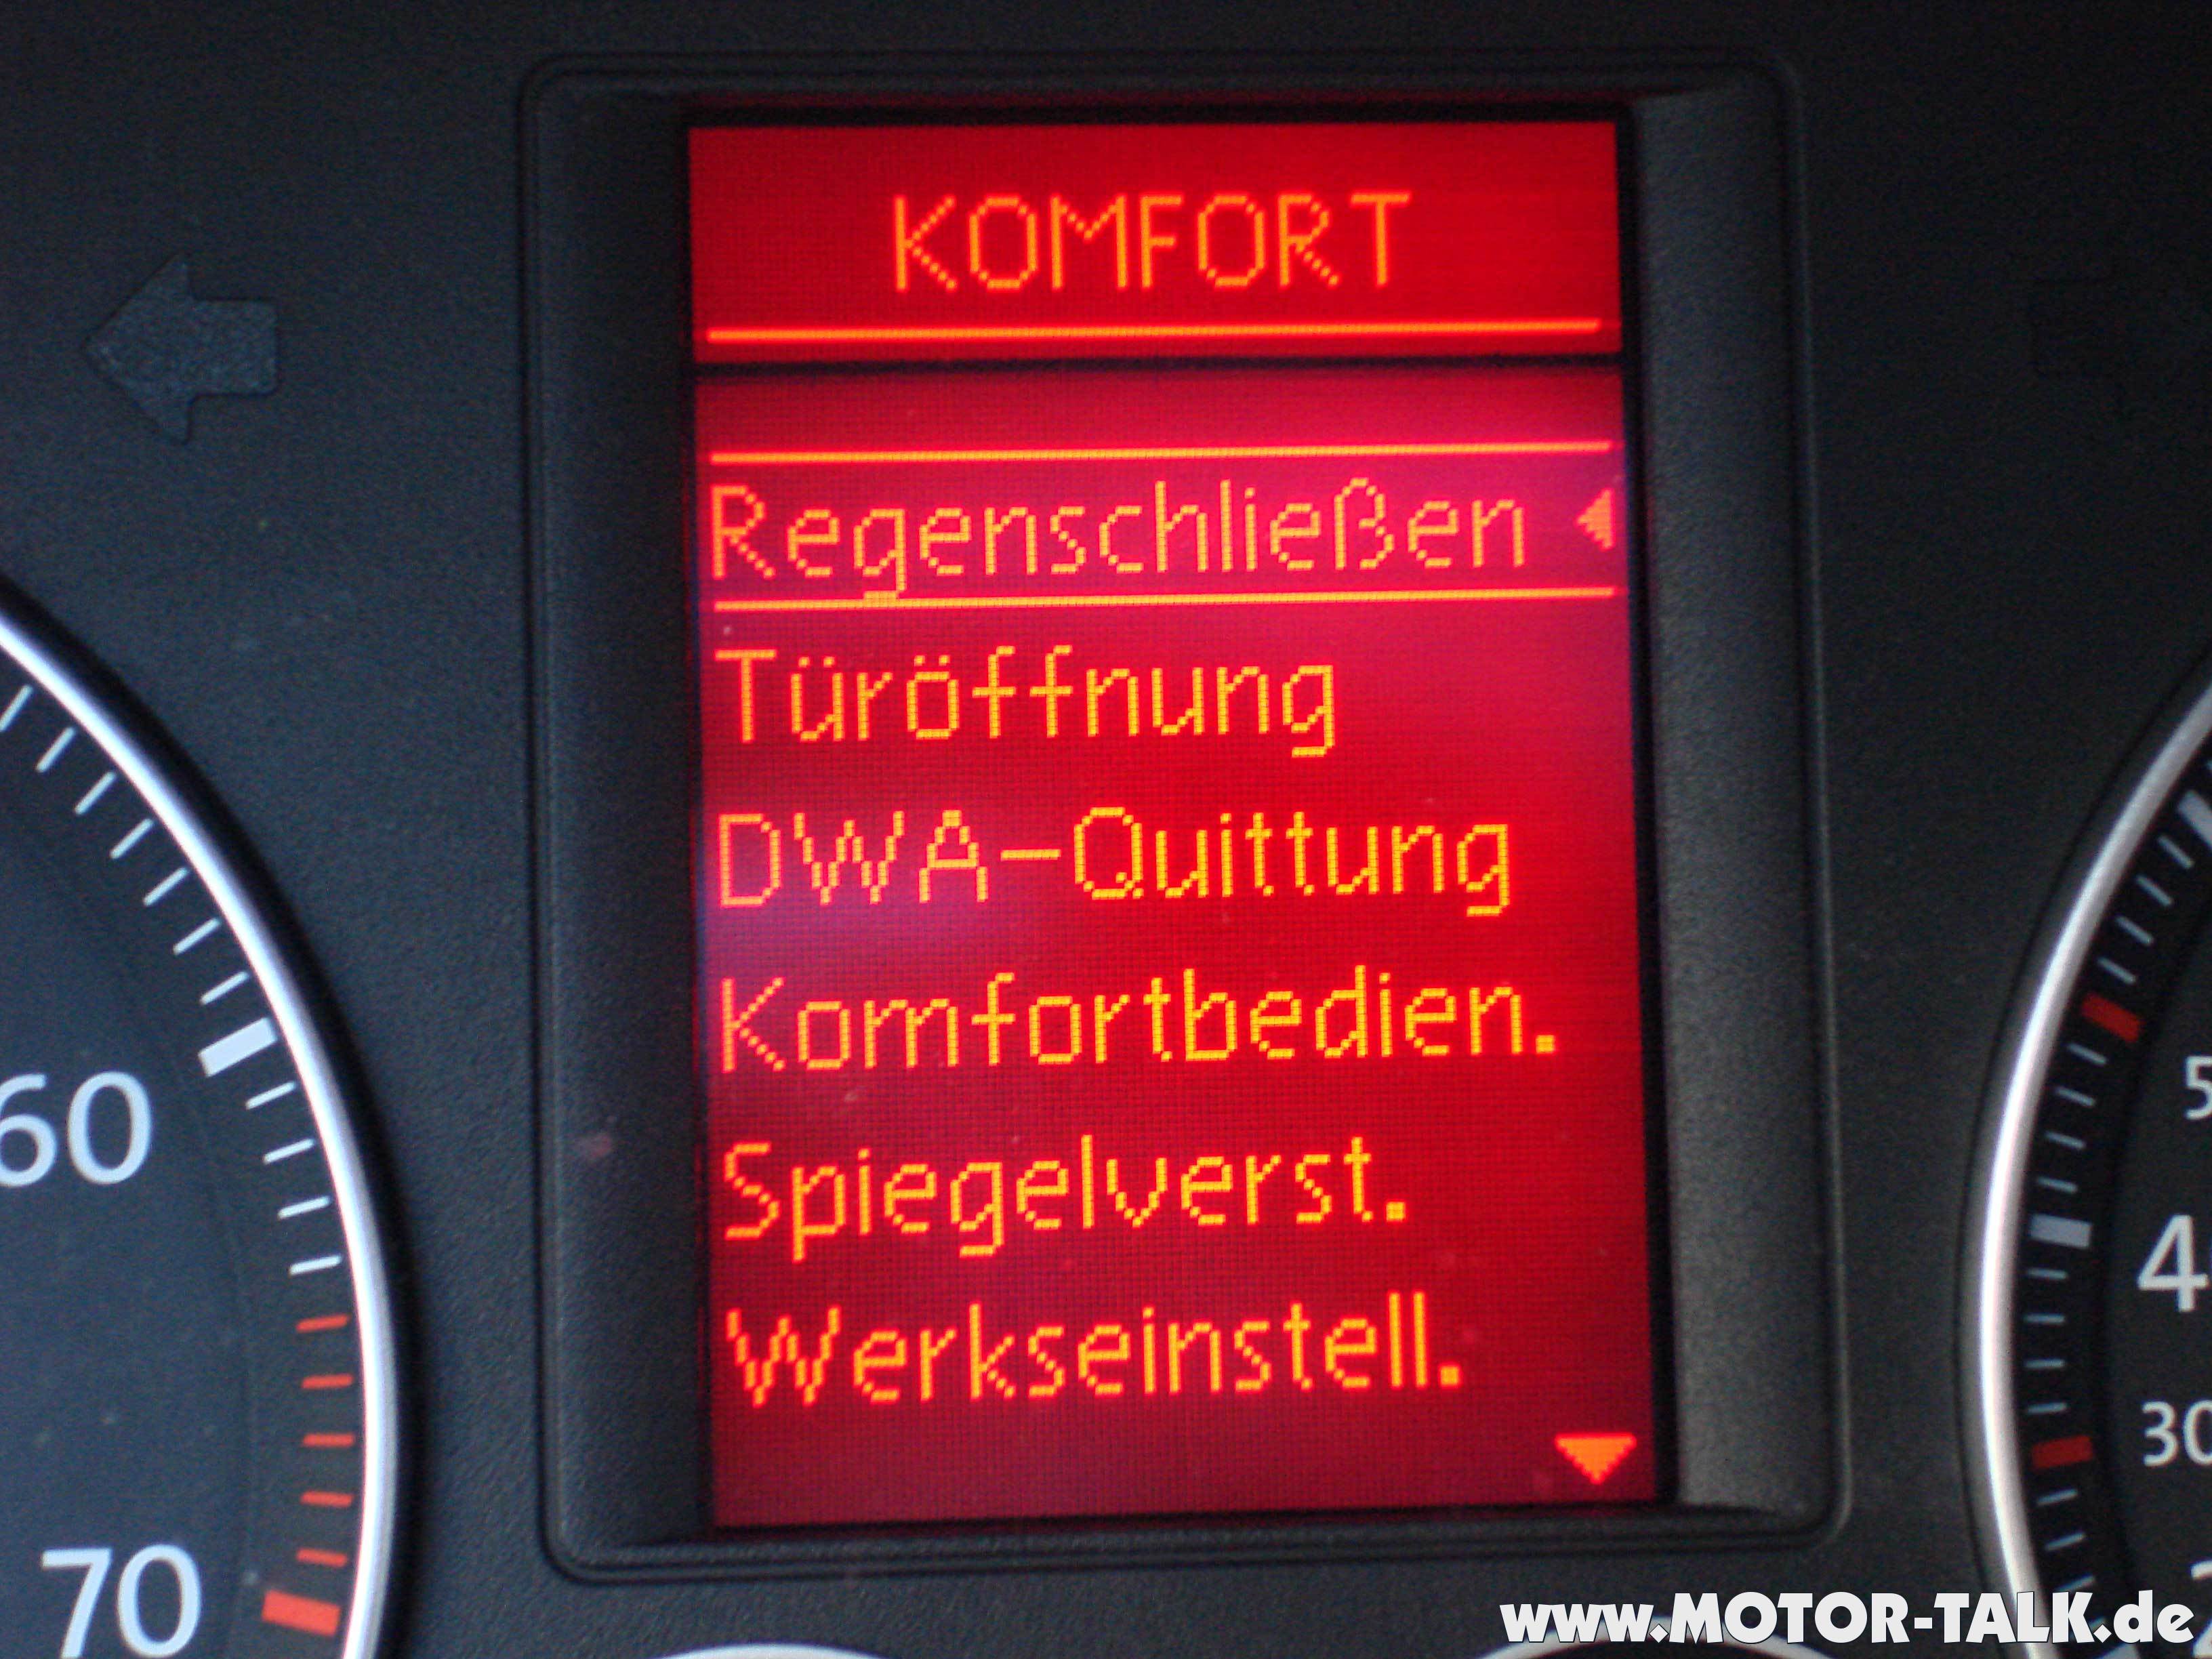 Regensensor Inaktiv? - Startseite Forum Auto Volkswa